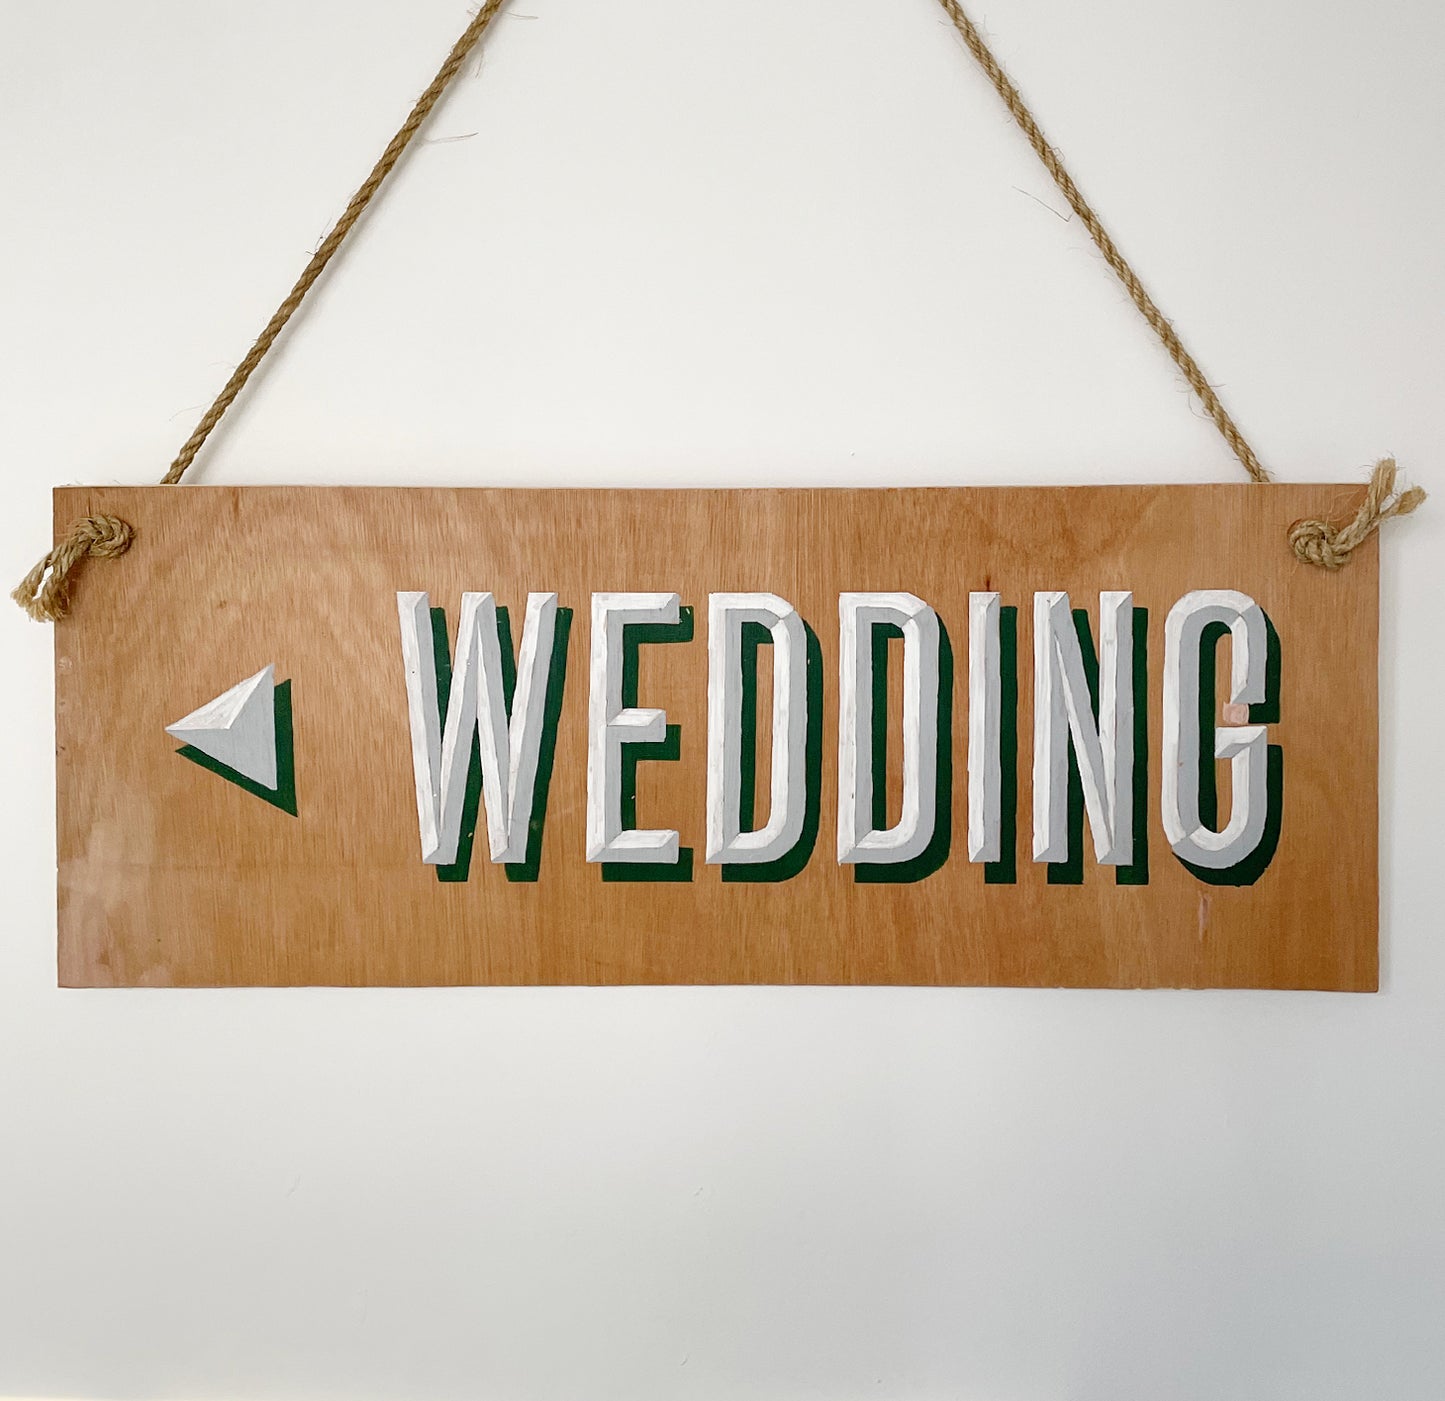 Rustic Wedding Signs Bundle